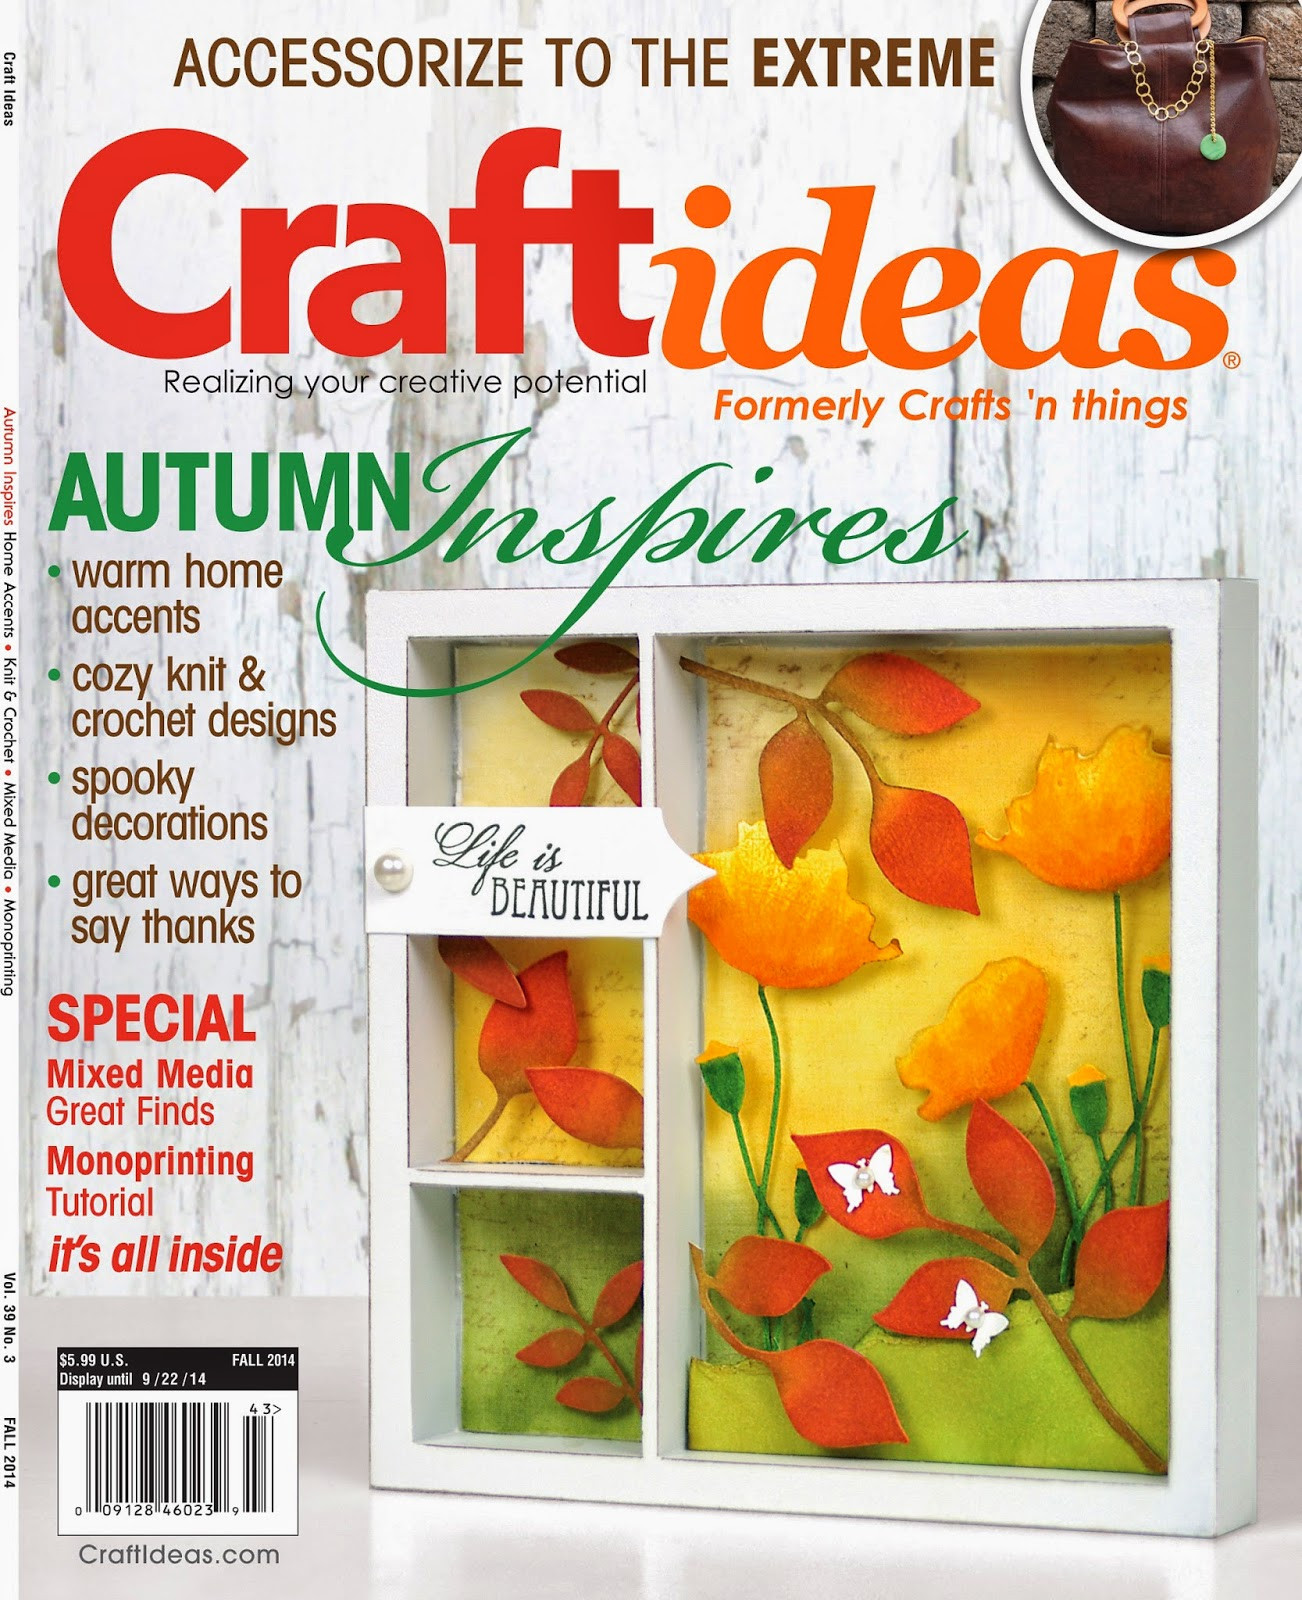 Best ideas about Craft Idea Magazine
. Save or Pin Joyfully Made Designs Craft Ideas Magazine Now.